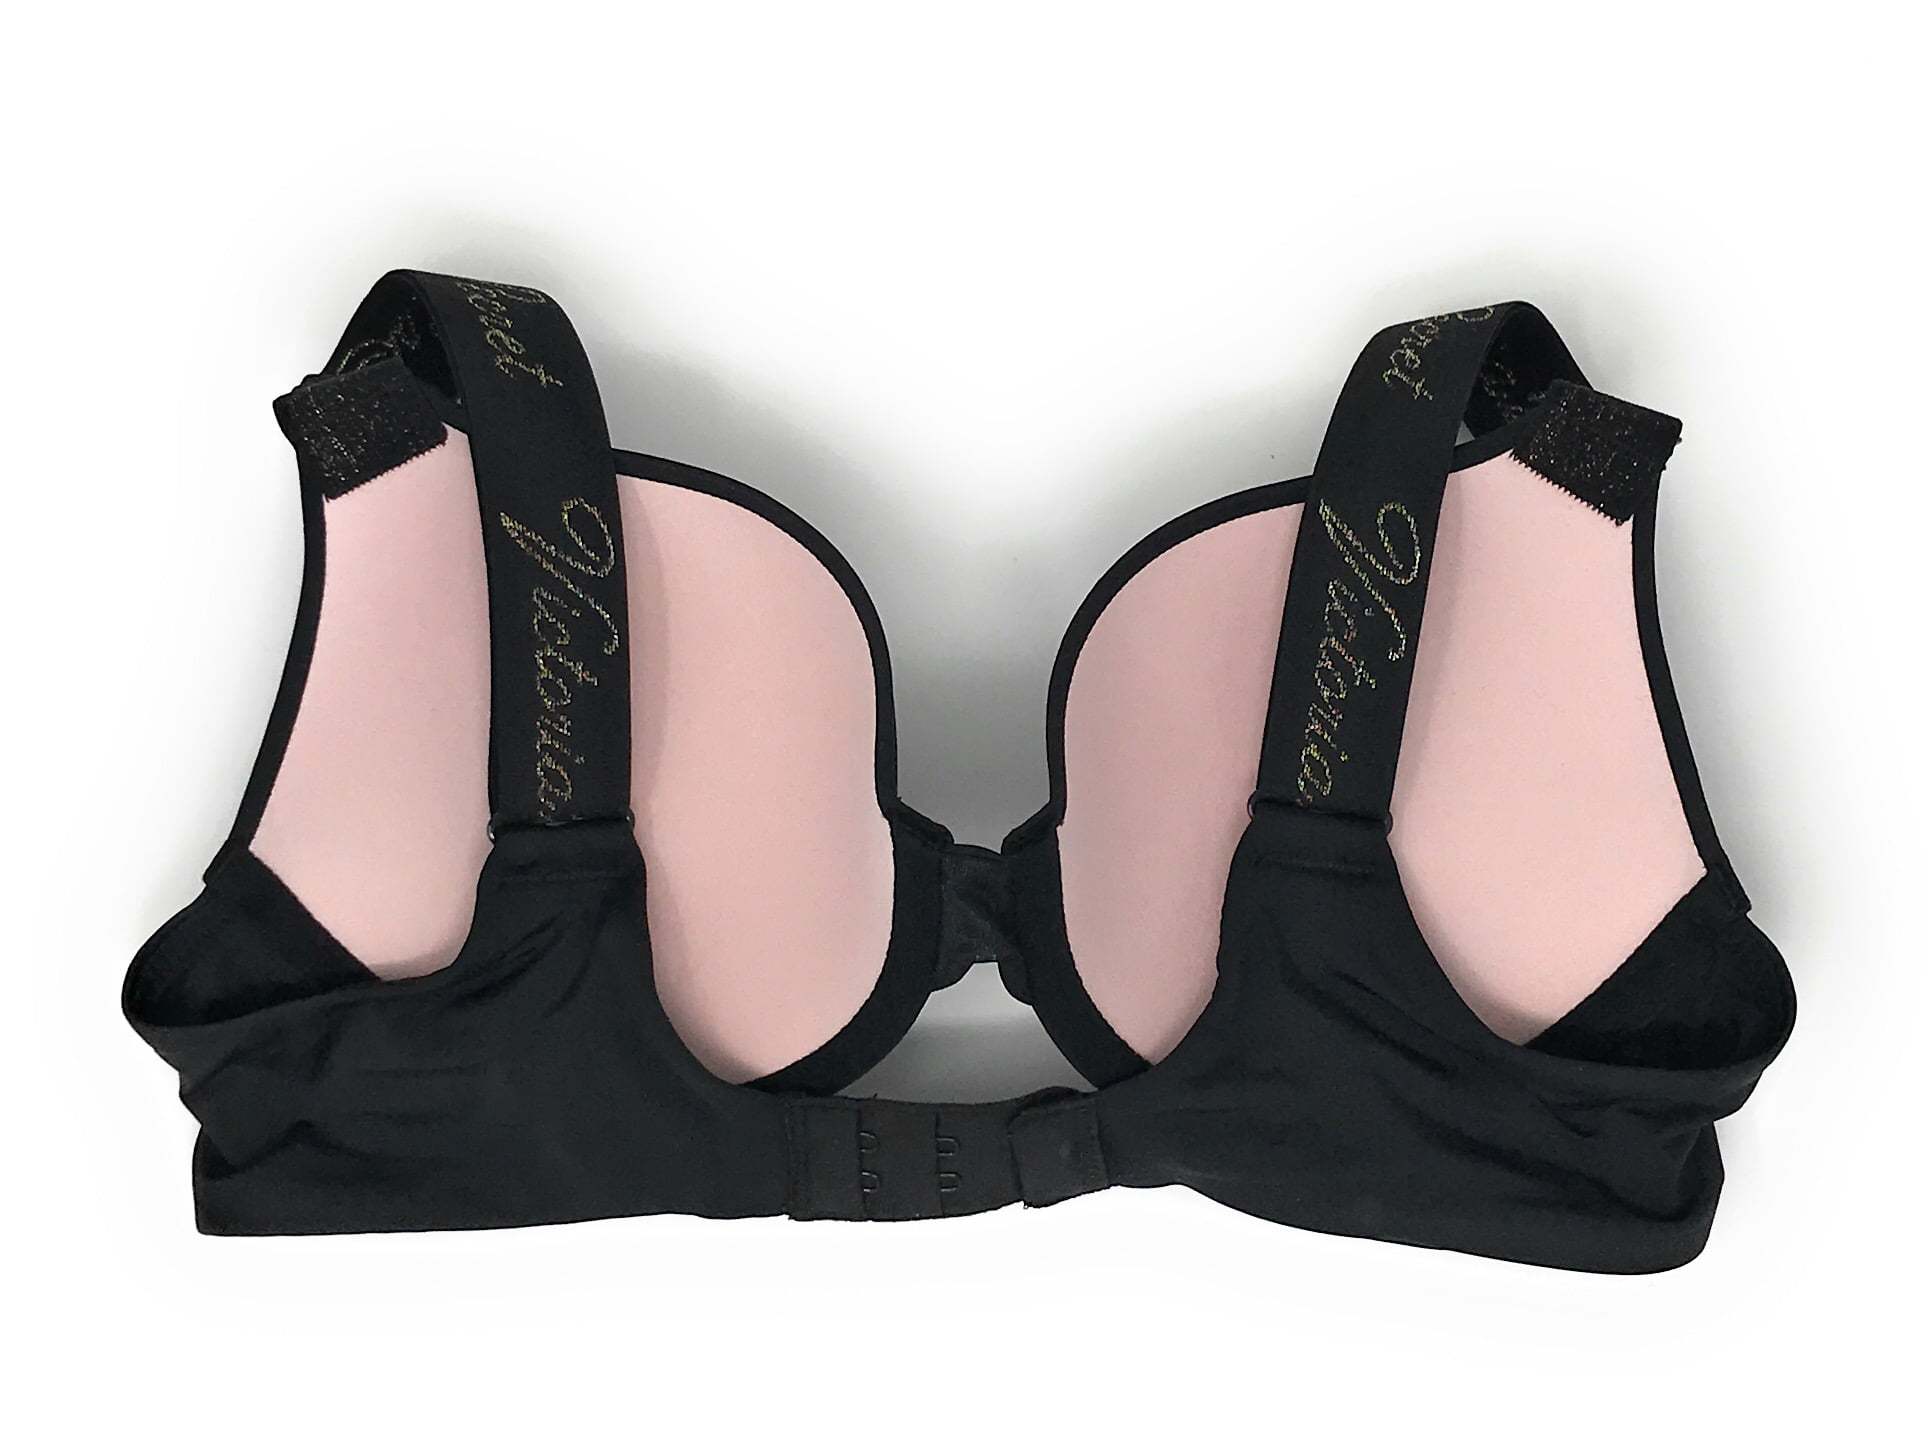 Victoria's Secret T-shirt push up full coverage black bra size 34DD - $23 -  From Iriana